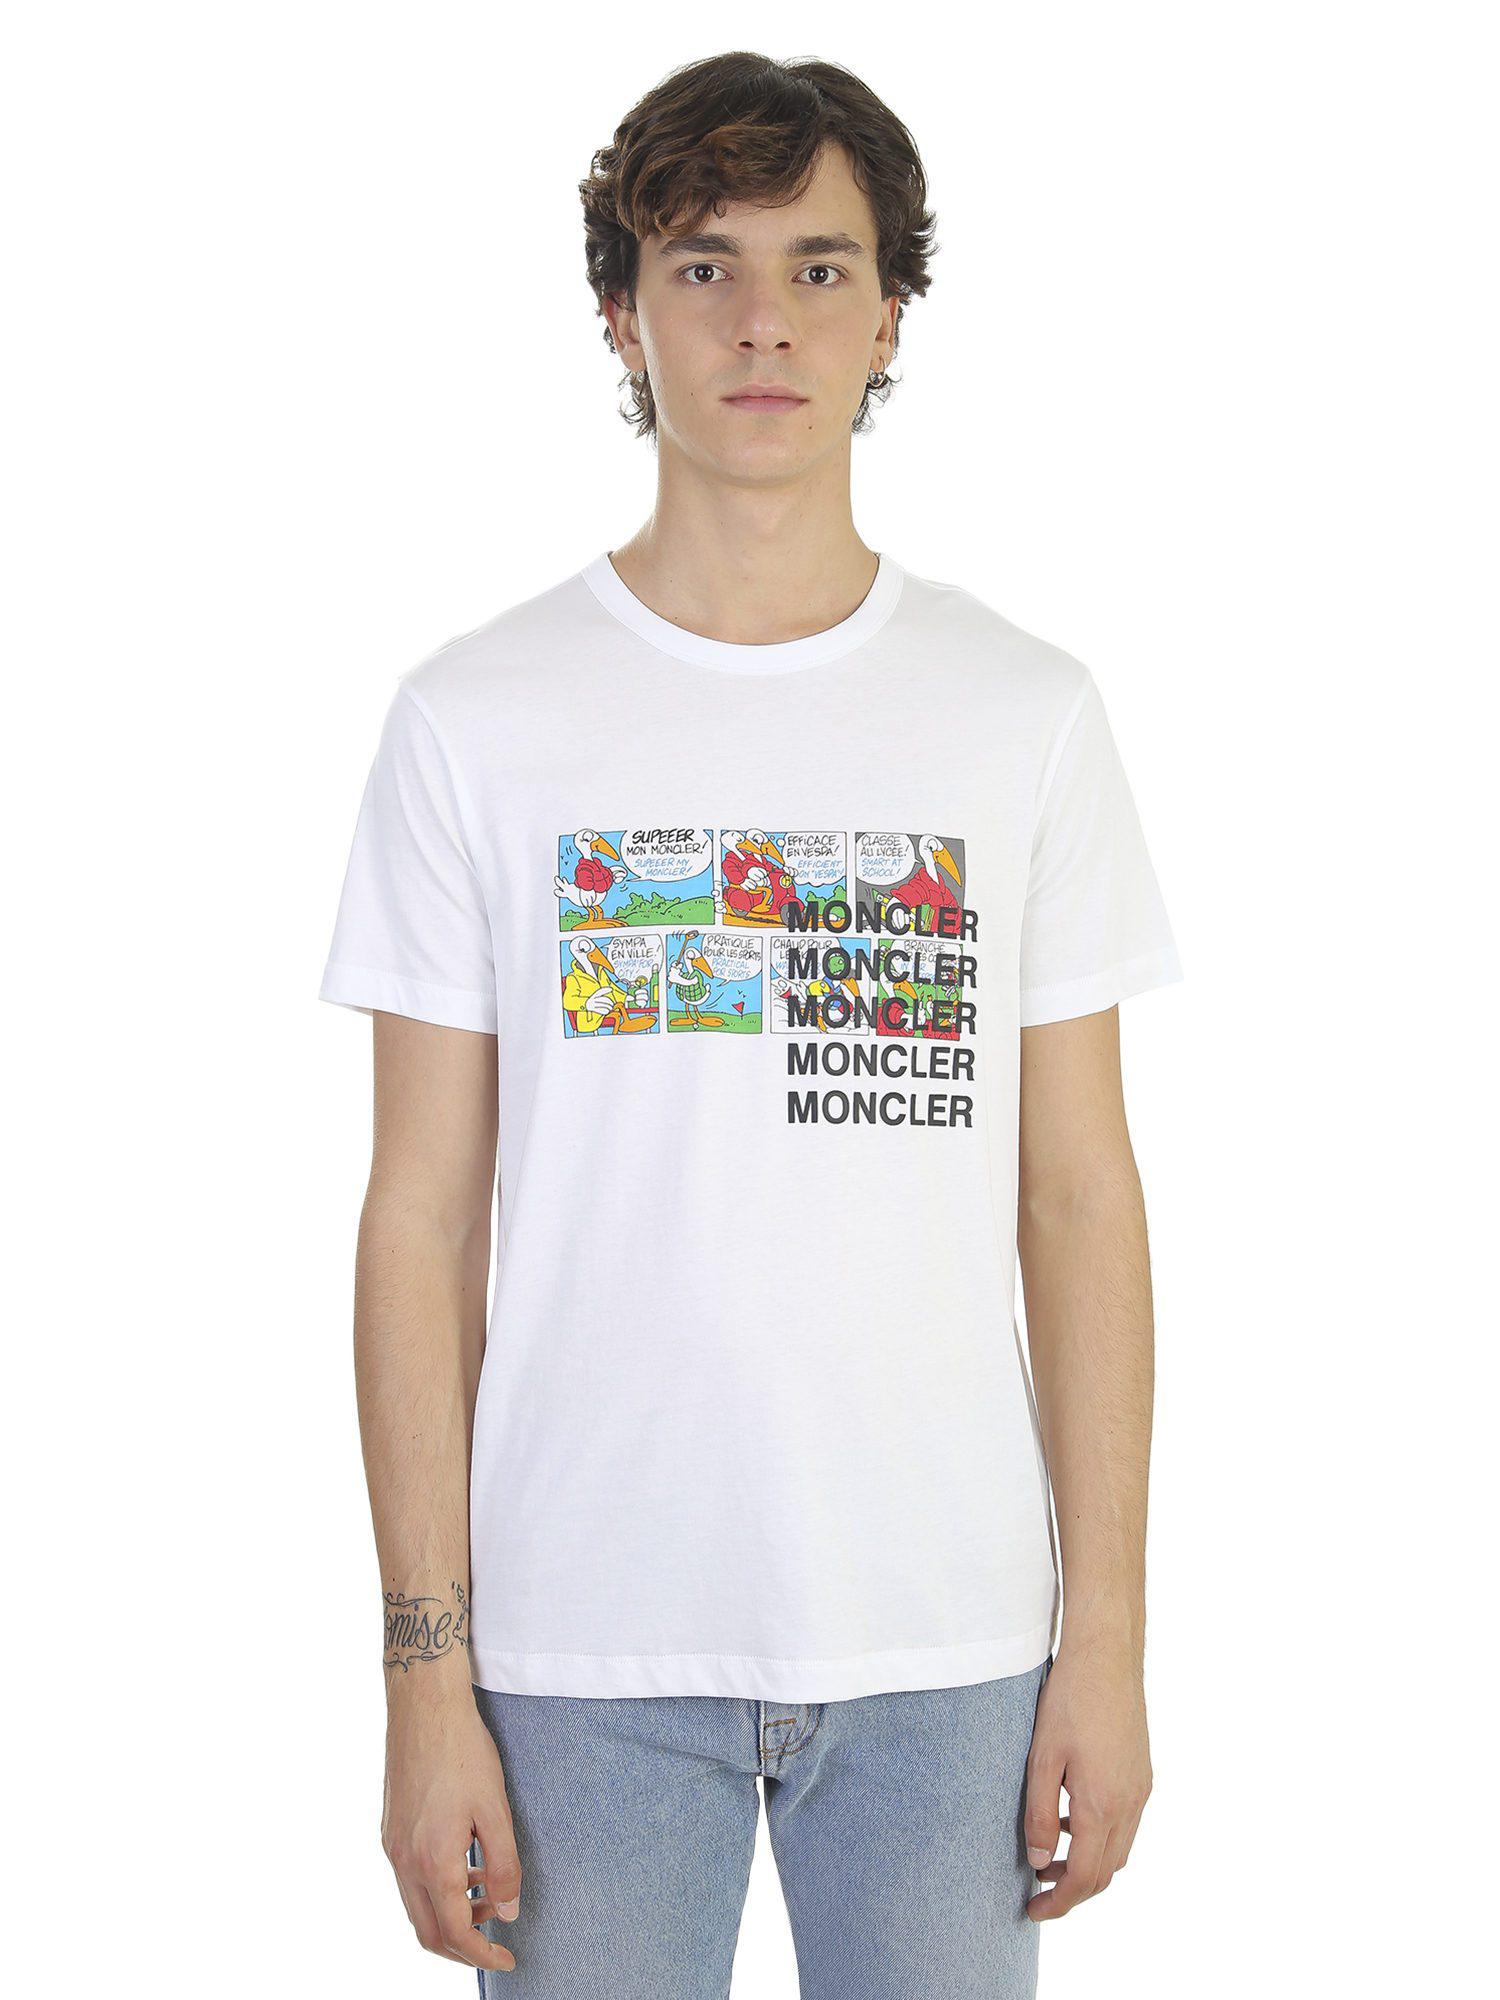 Moncler Comic T Shirt Flash Sales, 53% OFF | www.mothermercury.be